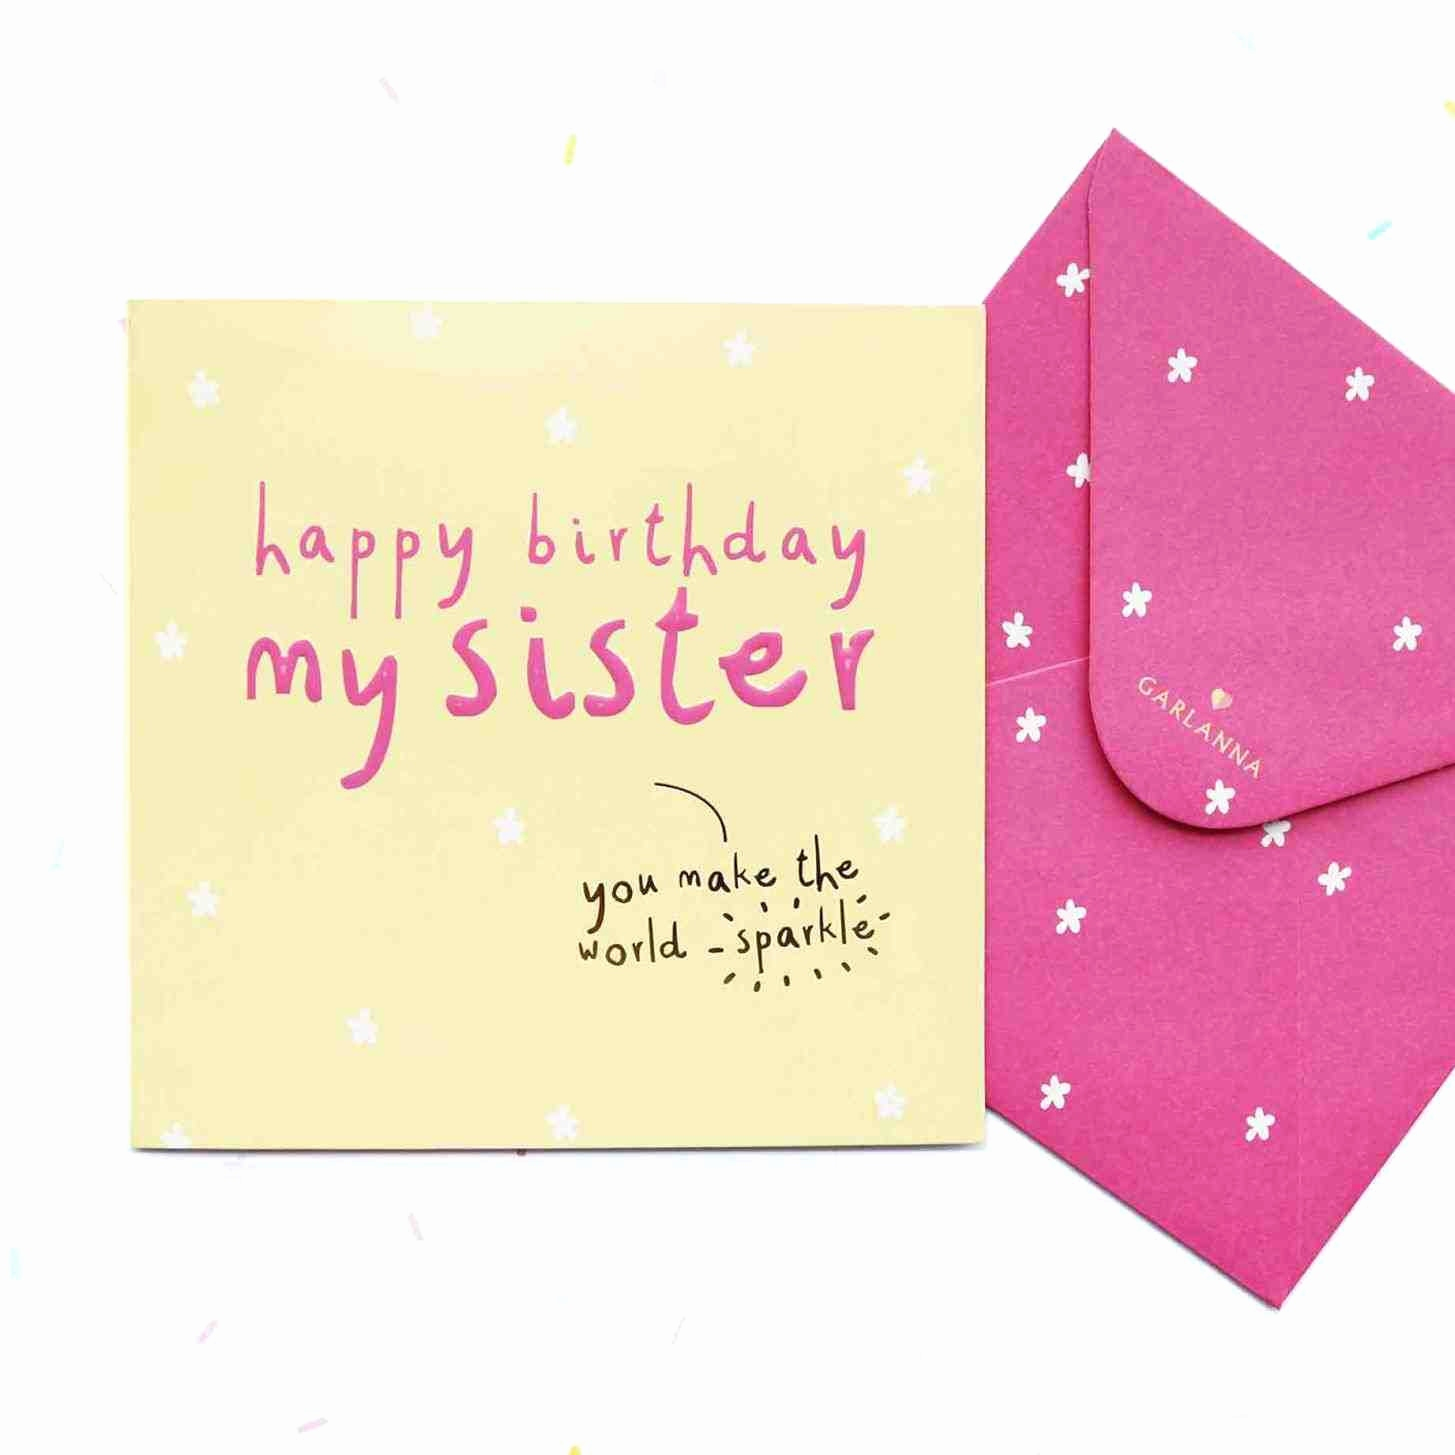 Birthday Card Ideas For Sister Cute Birthday Cards Ideas For Sister Unique Birthdayrds Home Made